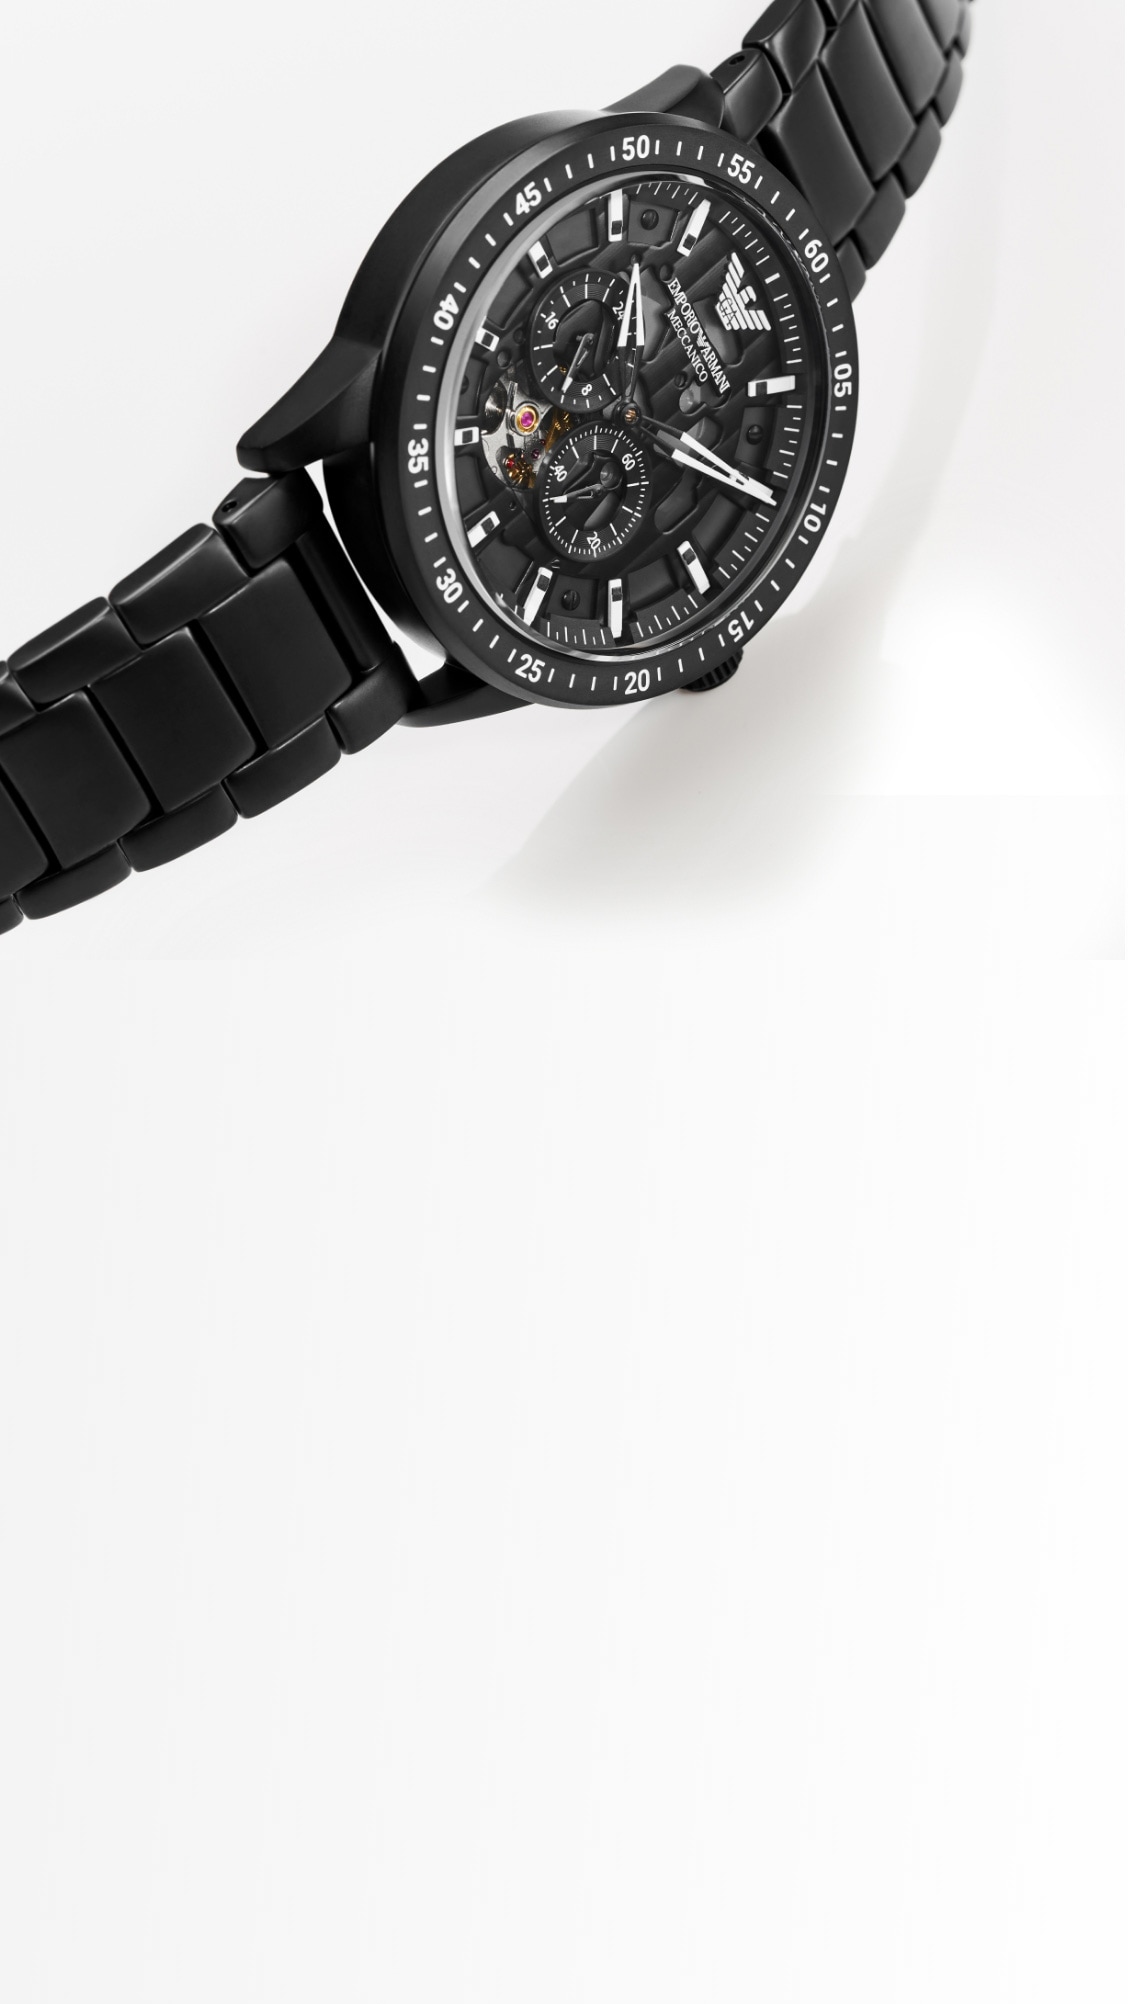 A black Emporio Armani watch on a white background.